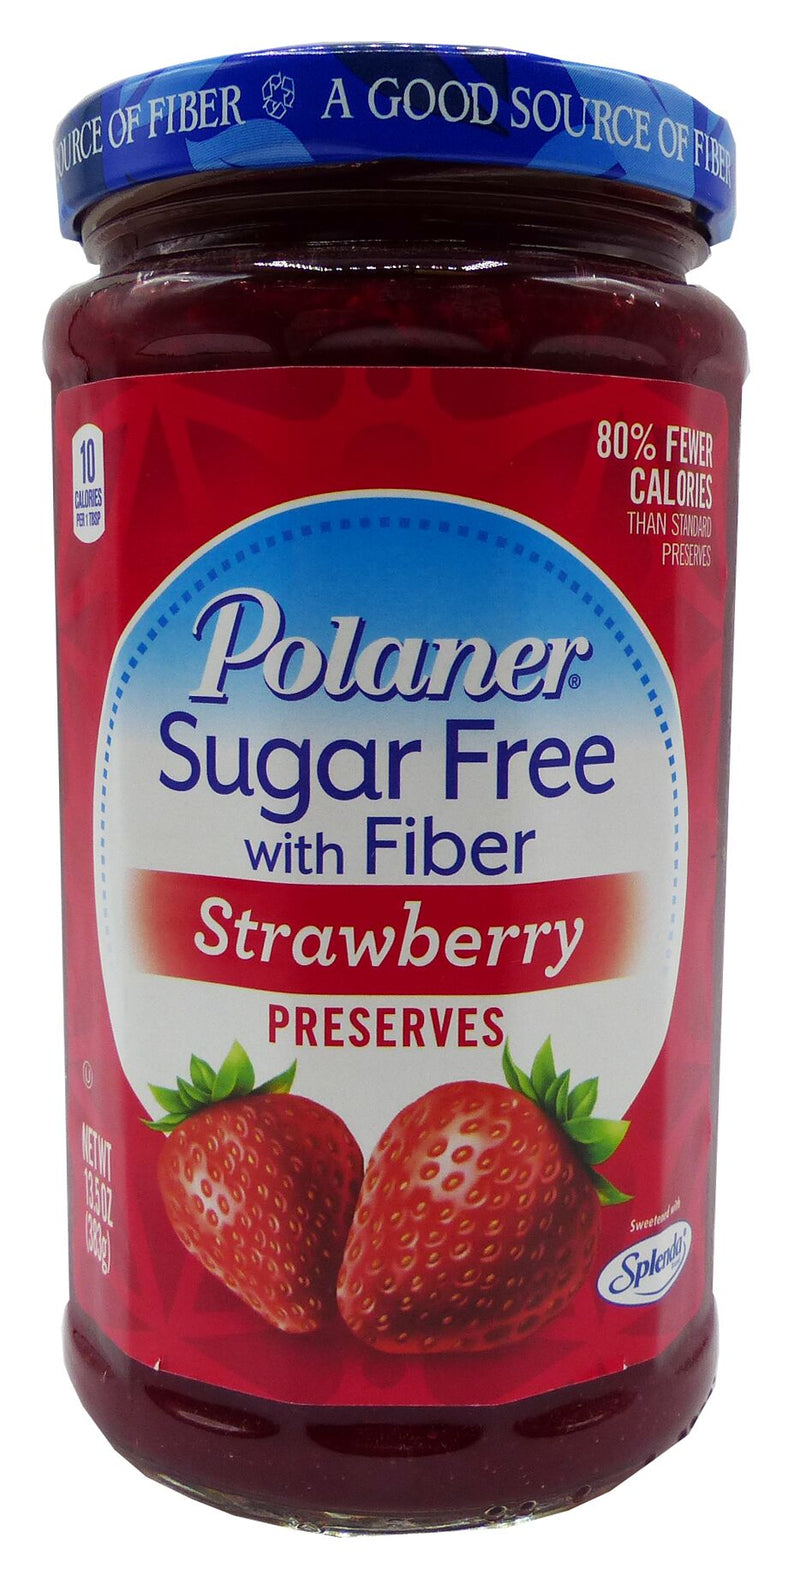 Polaner Sugar Free Preserves with Fiber